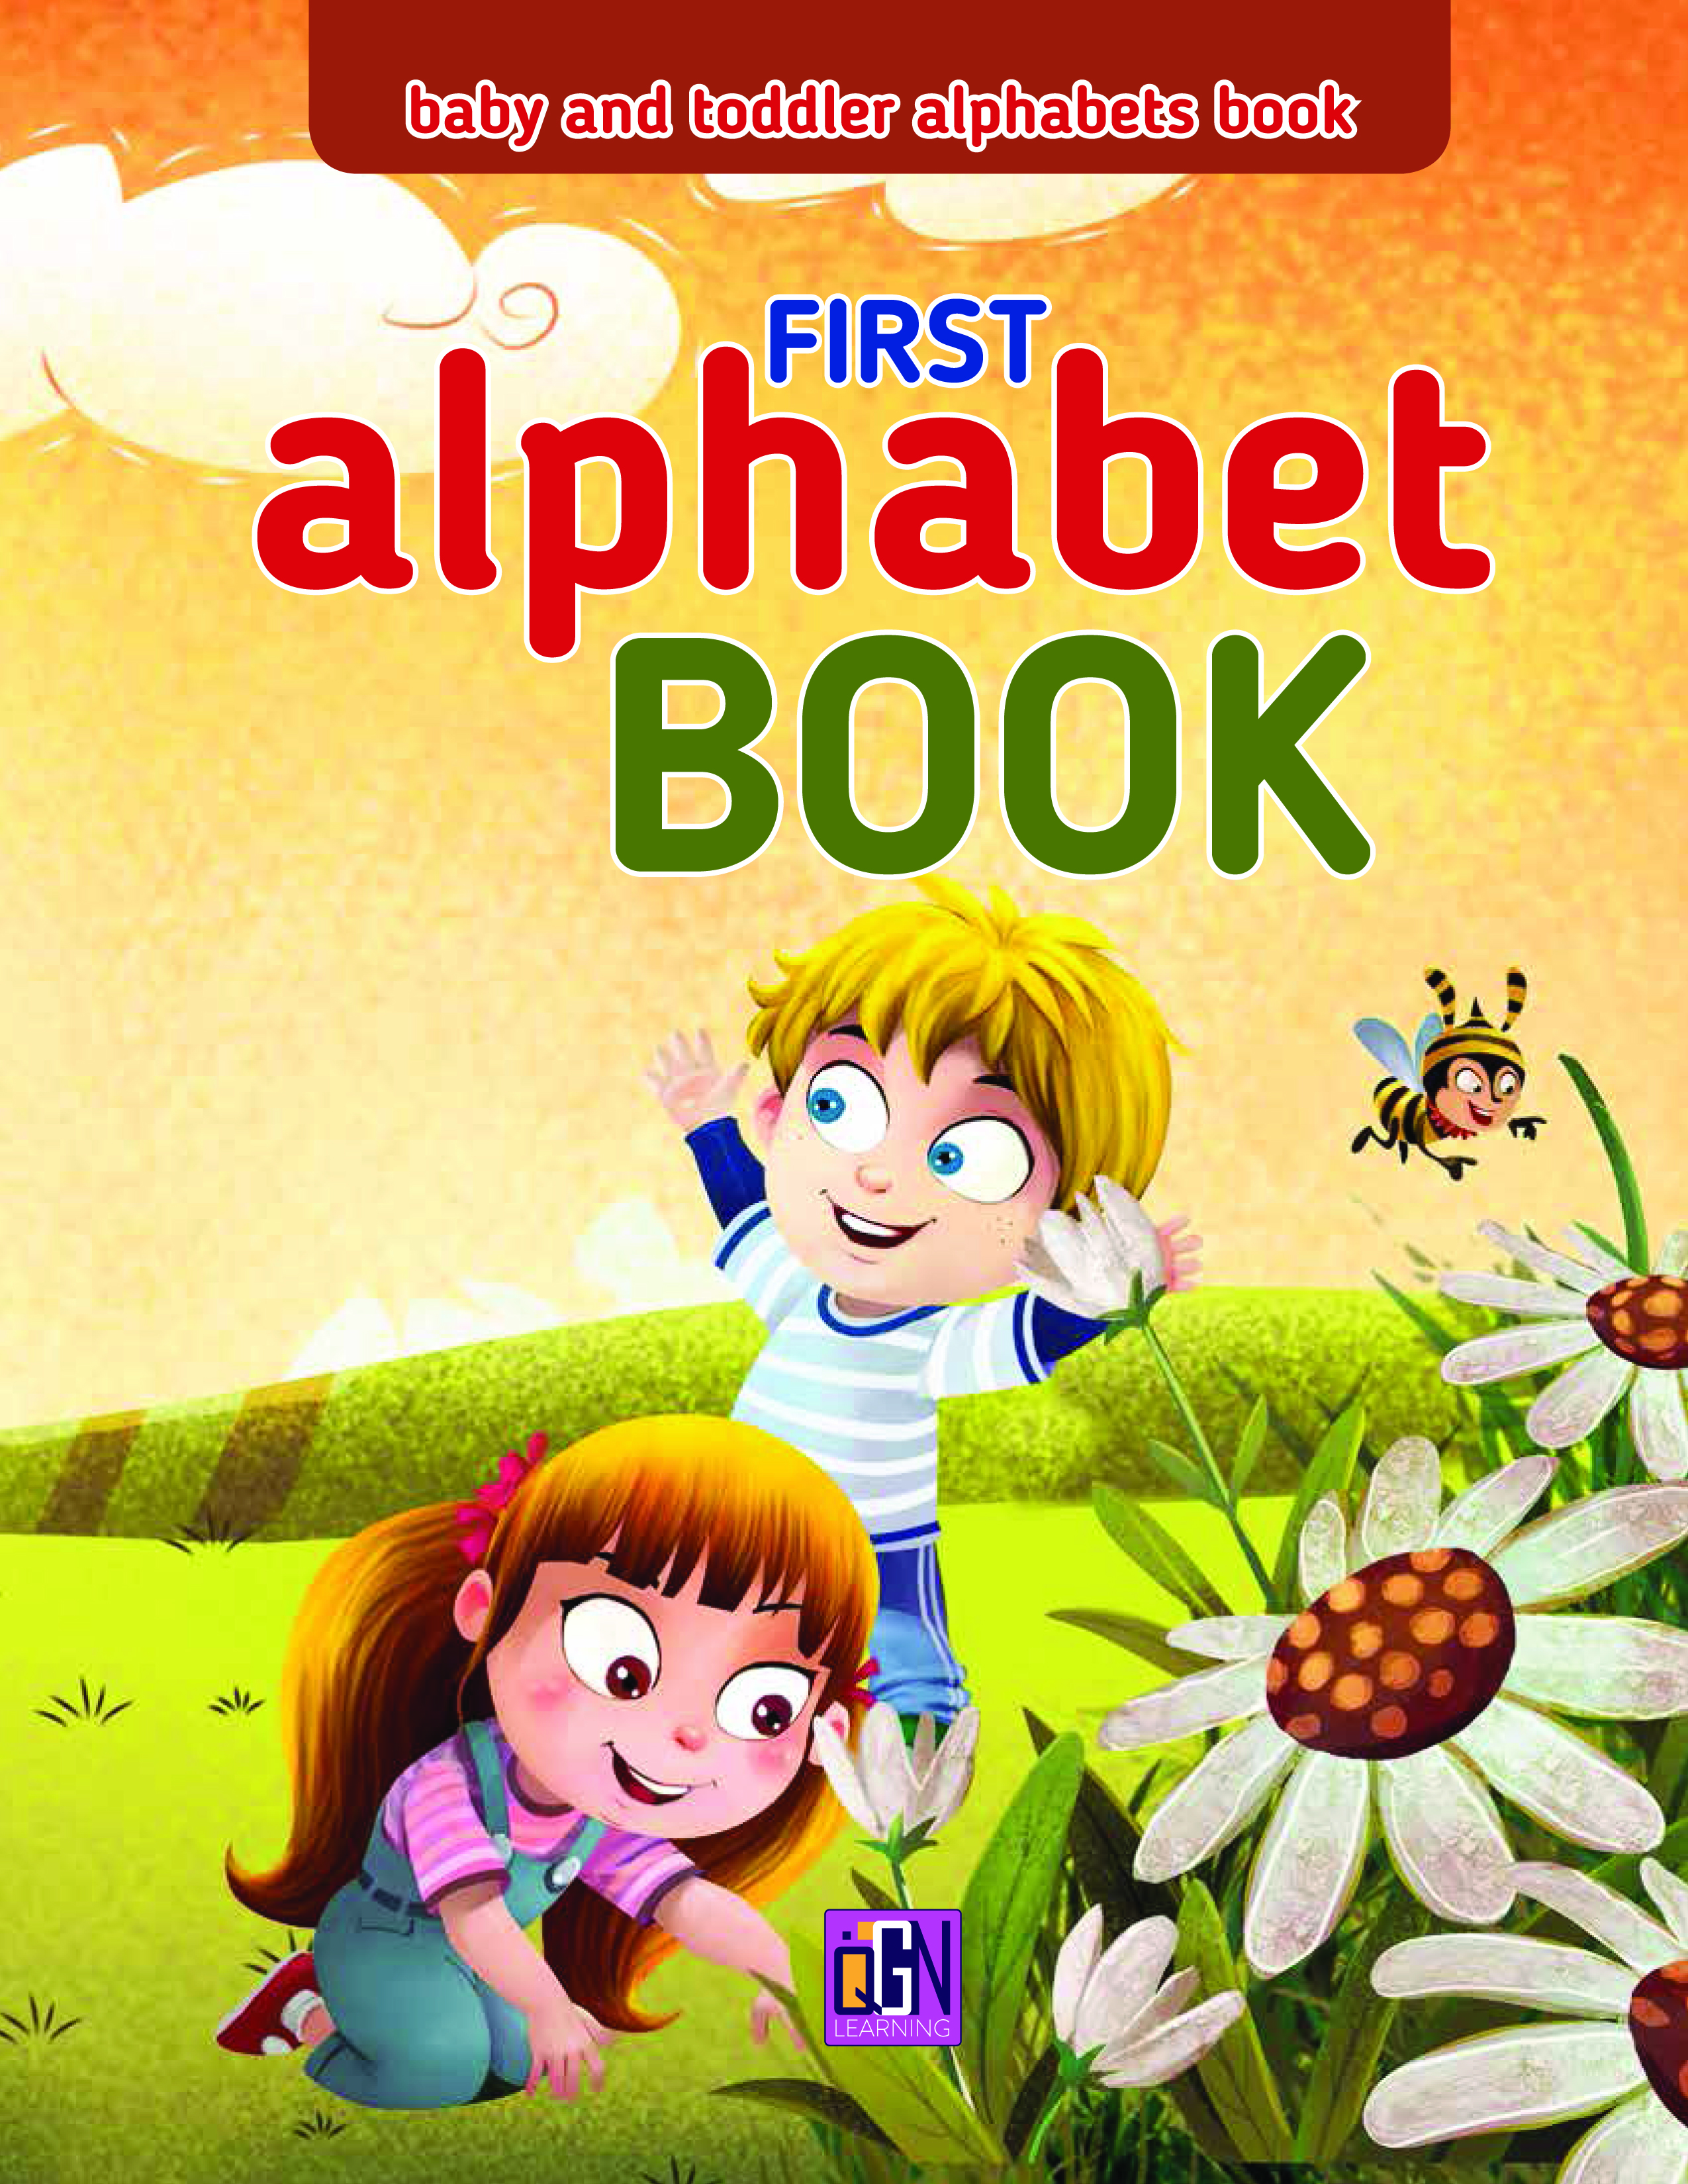 Alphabets book